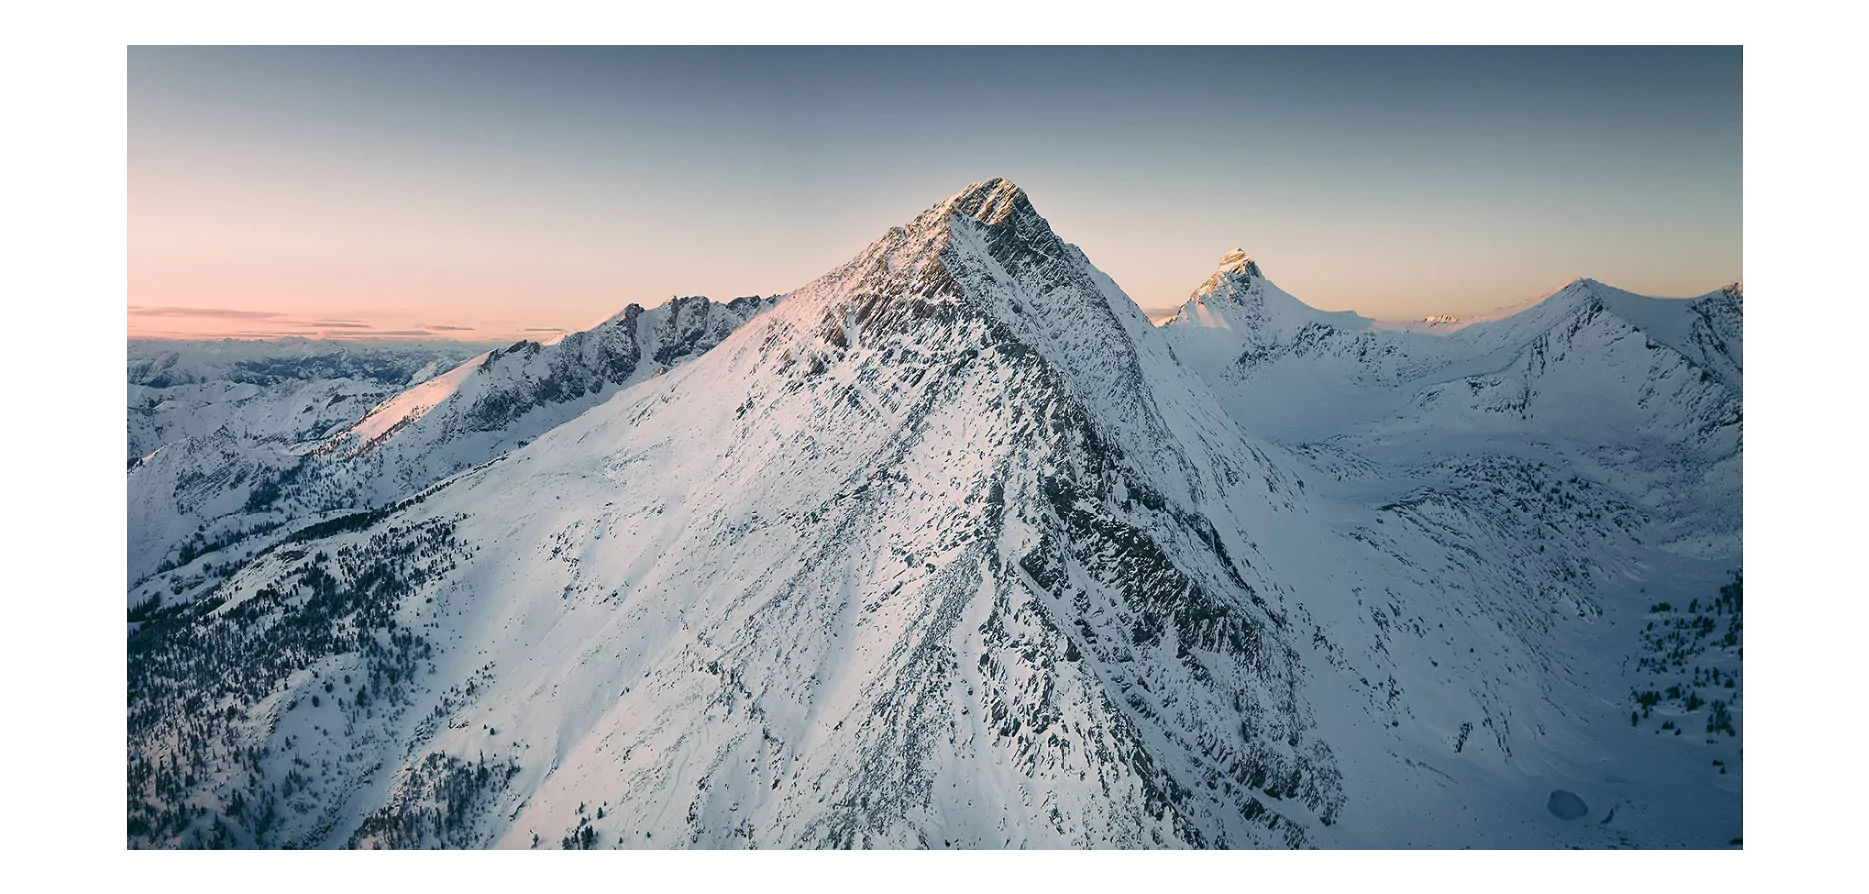 Alaska Snow Mountains (2021), by Benjamin Everett. Shot on Mavic 3 ©